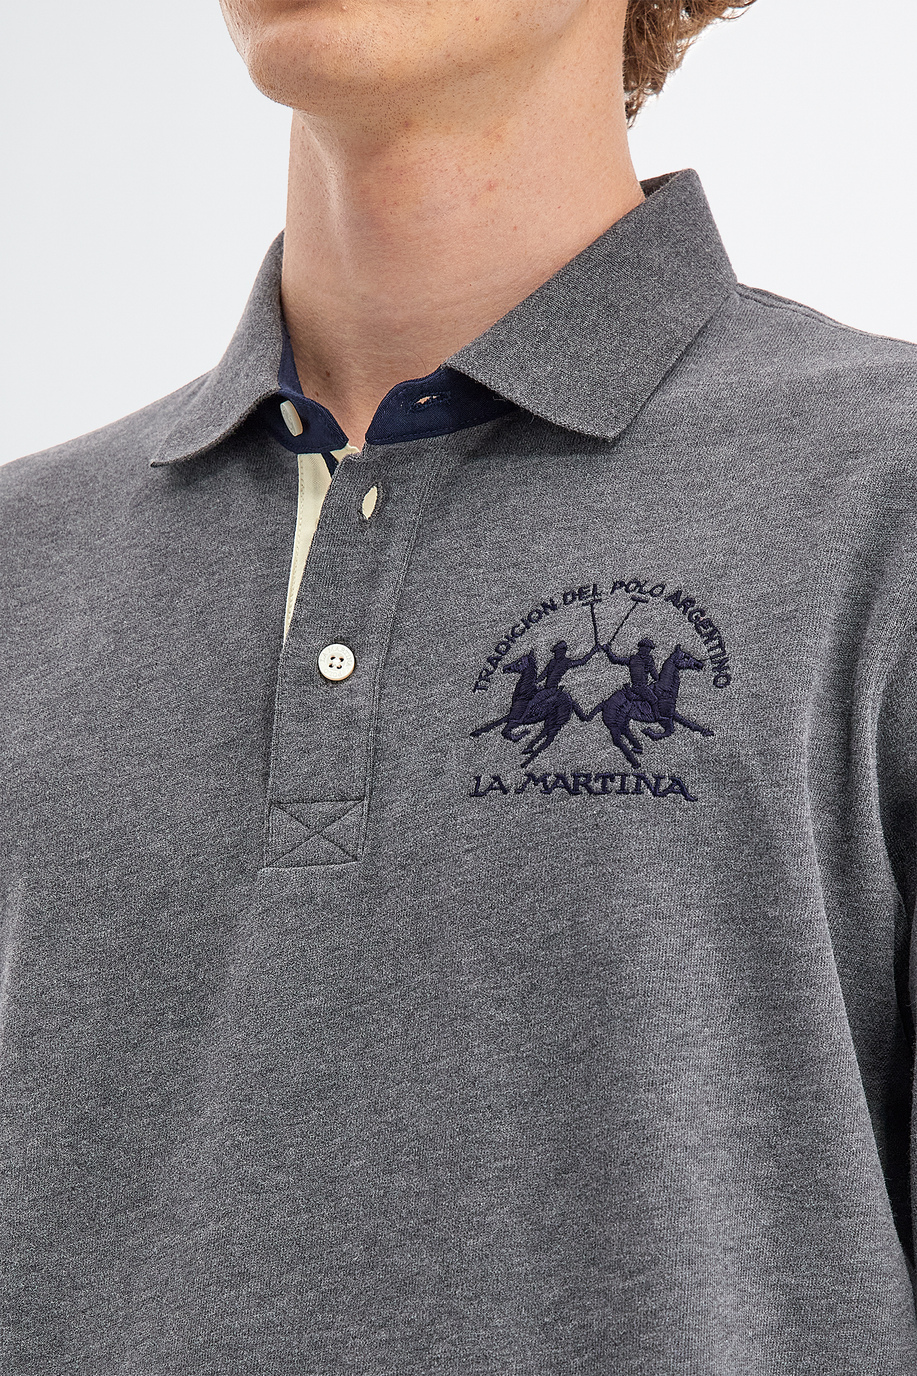 Herren-Poloshirt aus Baumwolljersey mit langen Ärmeln - -30% | step 3 | US | La Martina - Official Online Shop